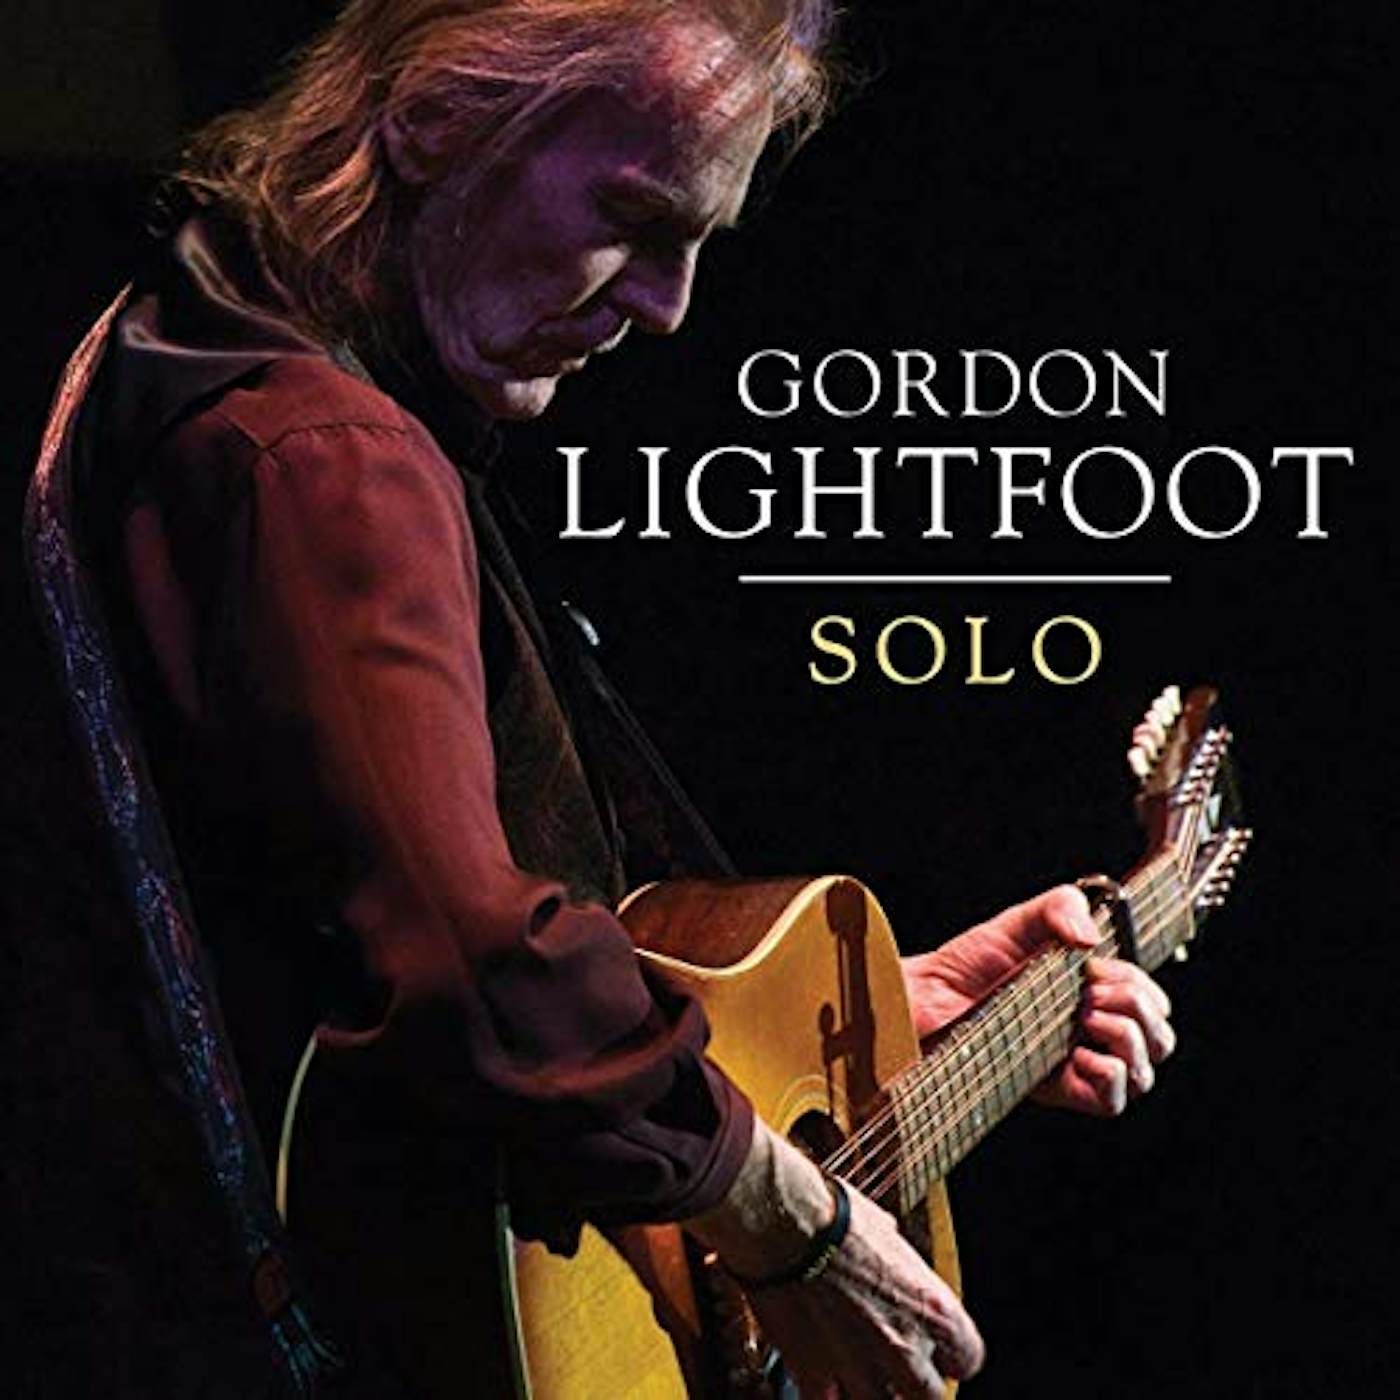 Gordon Lightfoot Solo Vinyl Record